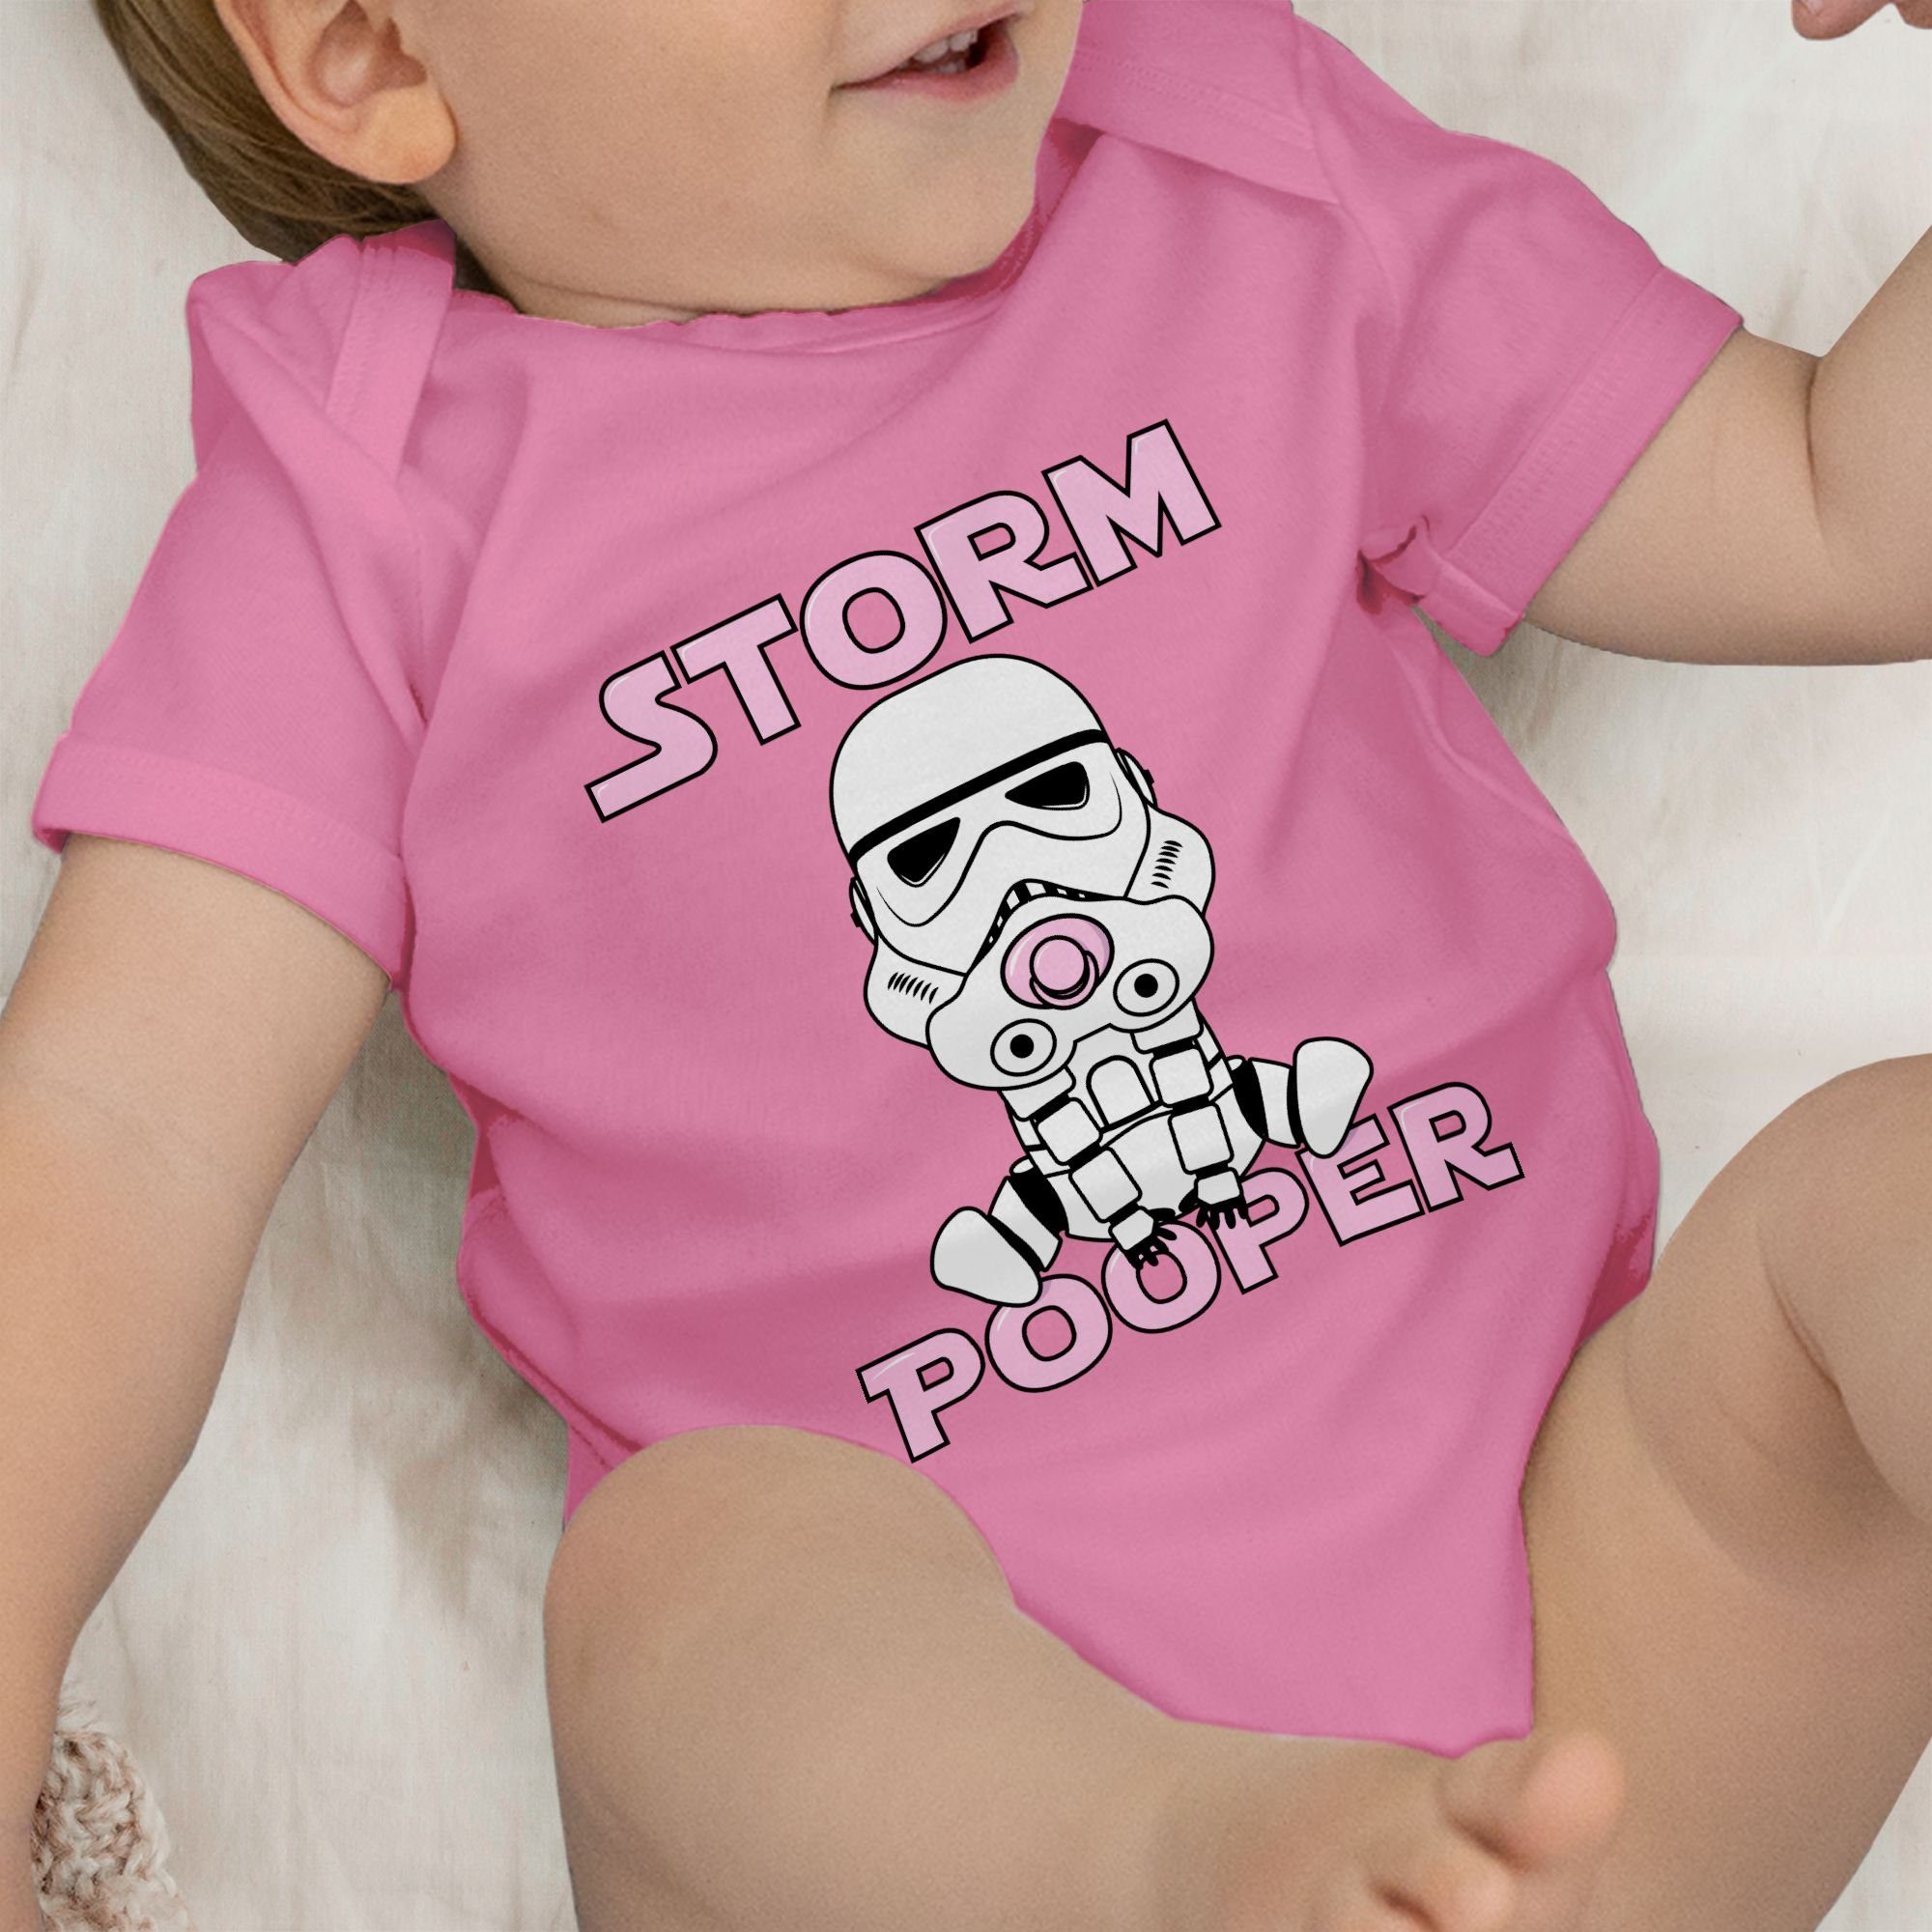 Baby Shirtbody Storm Pooper Pink Sprüche 1 I Shirtracer